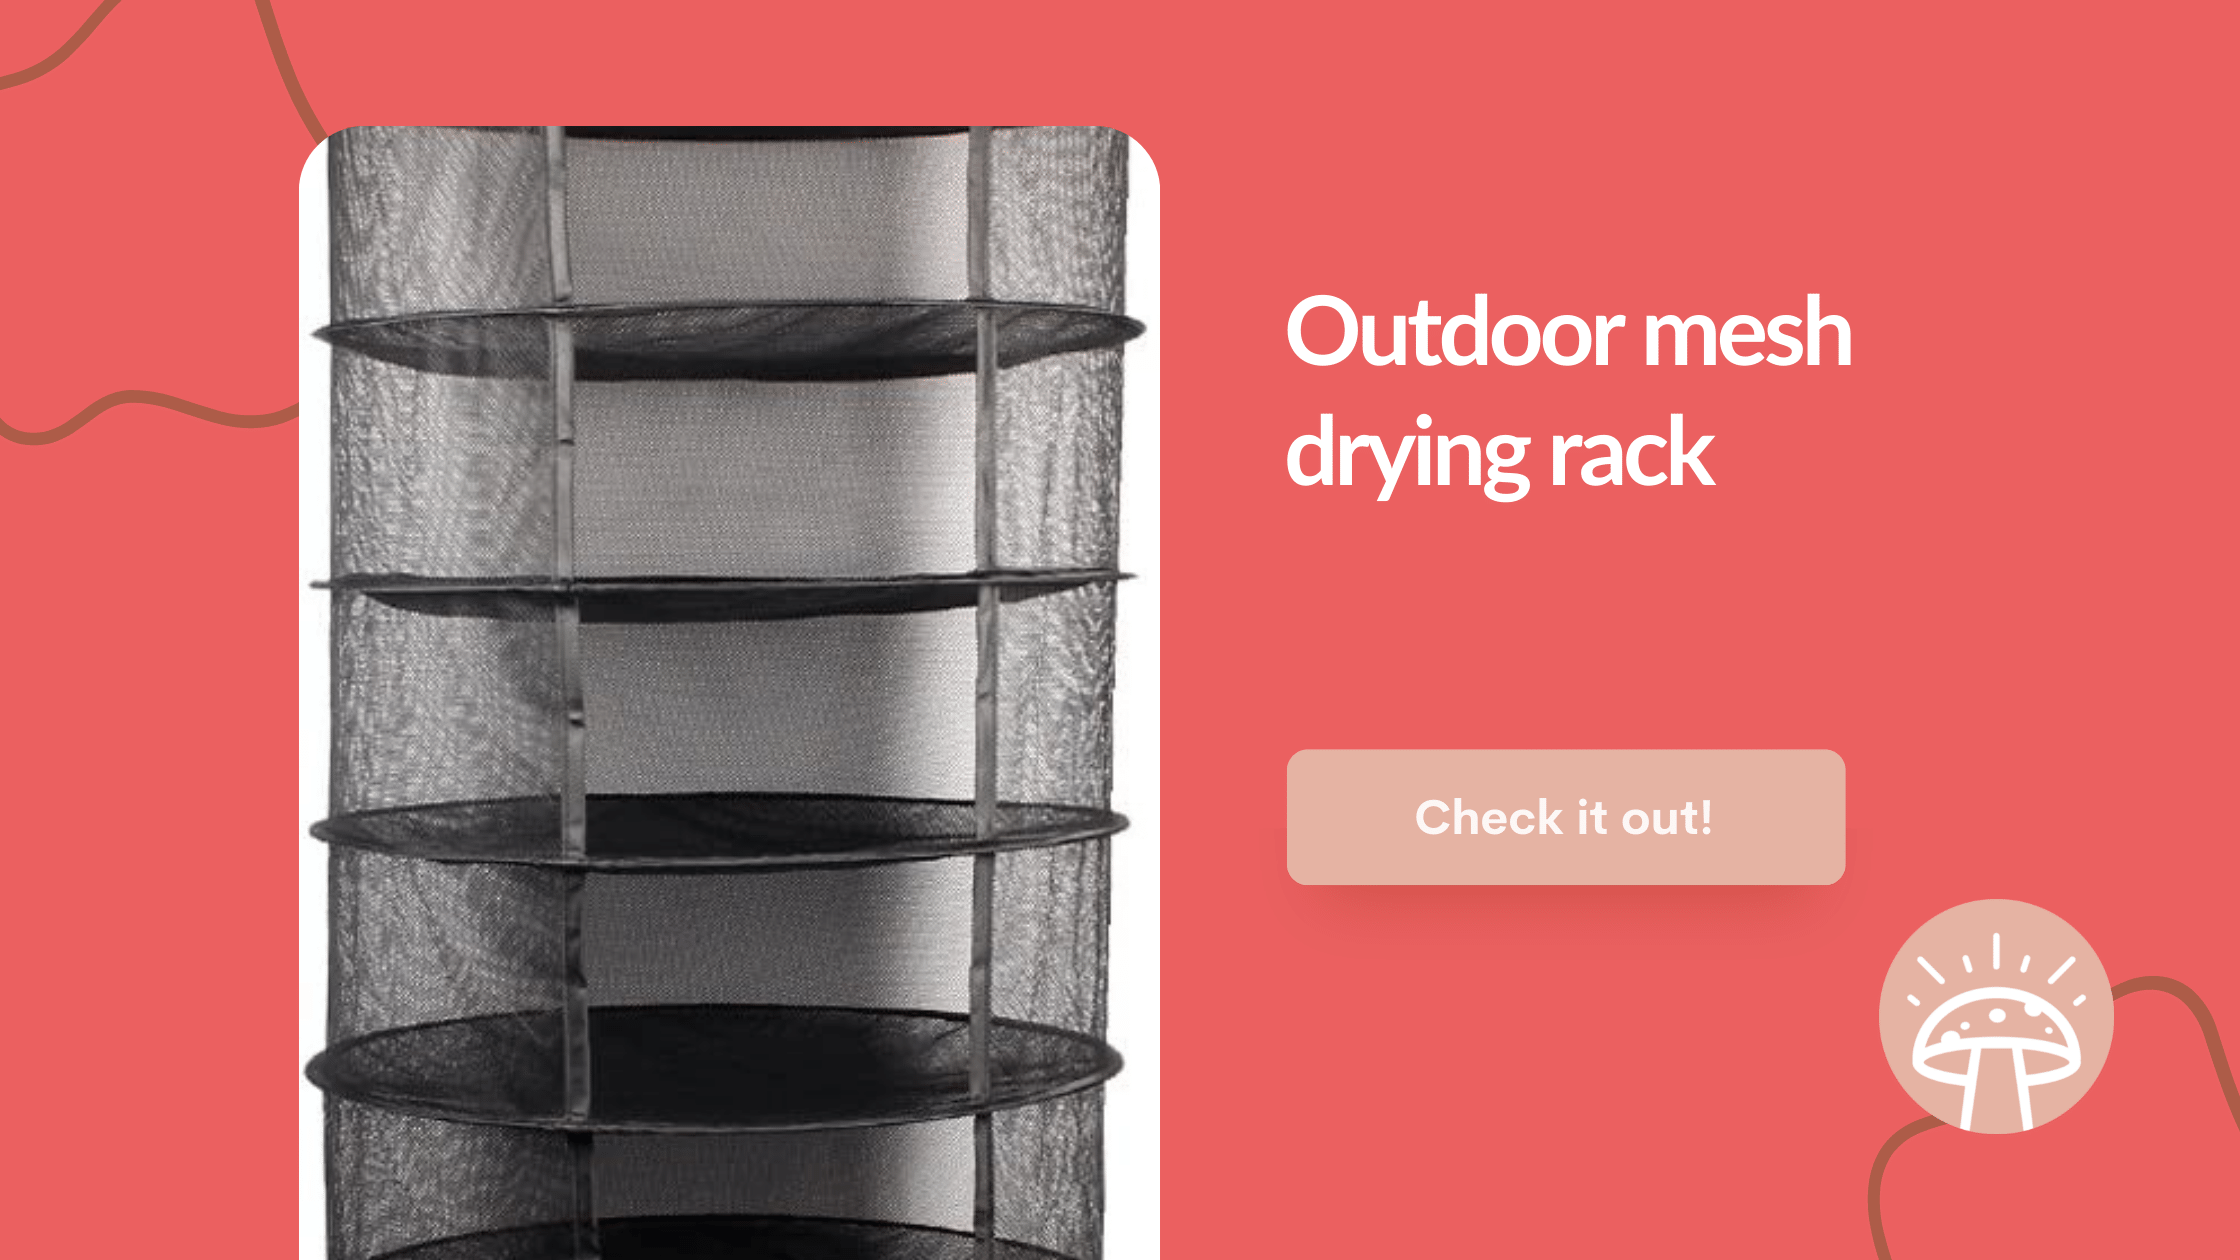 mesh outdoor drying rack for mushroomshttps://www.amazon.com/Growsun-Layer-Black-Hanging-Drying/dp/B01GXHQIKO/ref=asc_df_B01GXHQIKO/